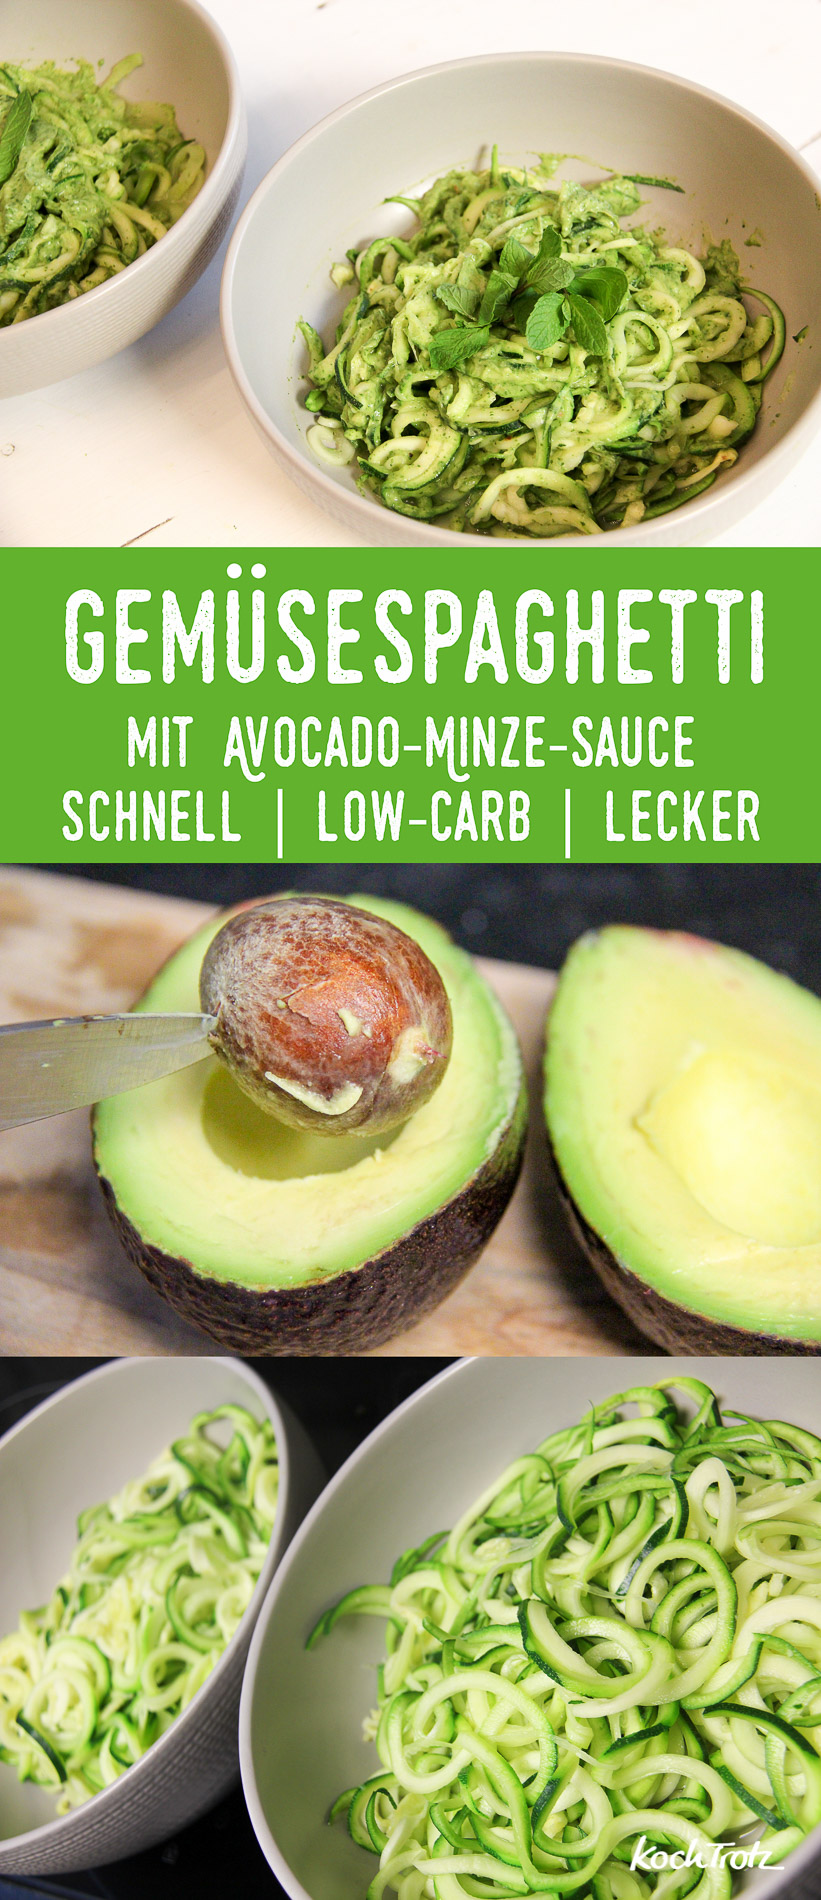 Gemüsespaghetti mit Avocado-Minze-Sauce | schnell | low-carb | lecker | Zoodles